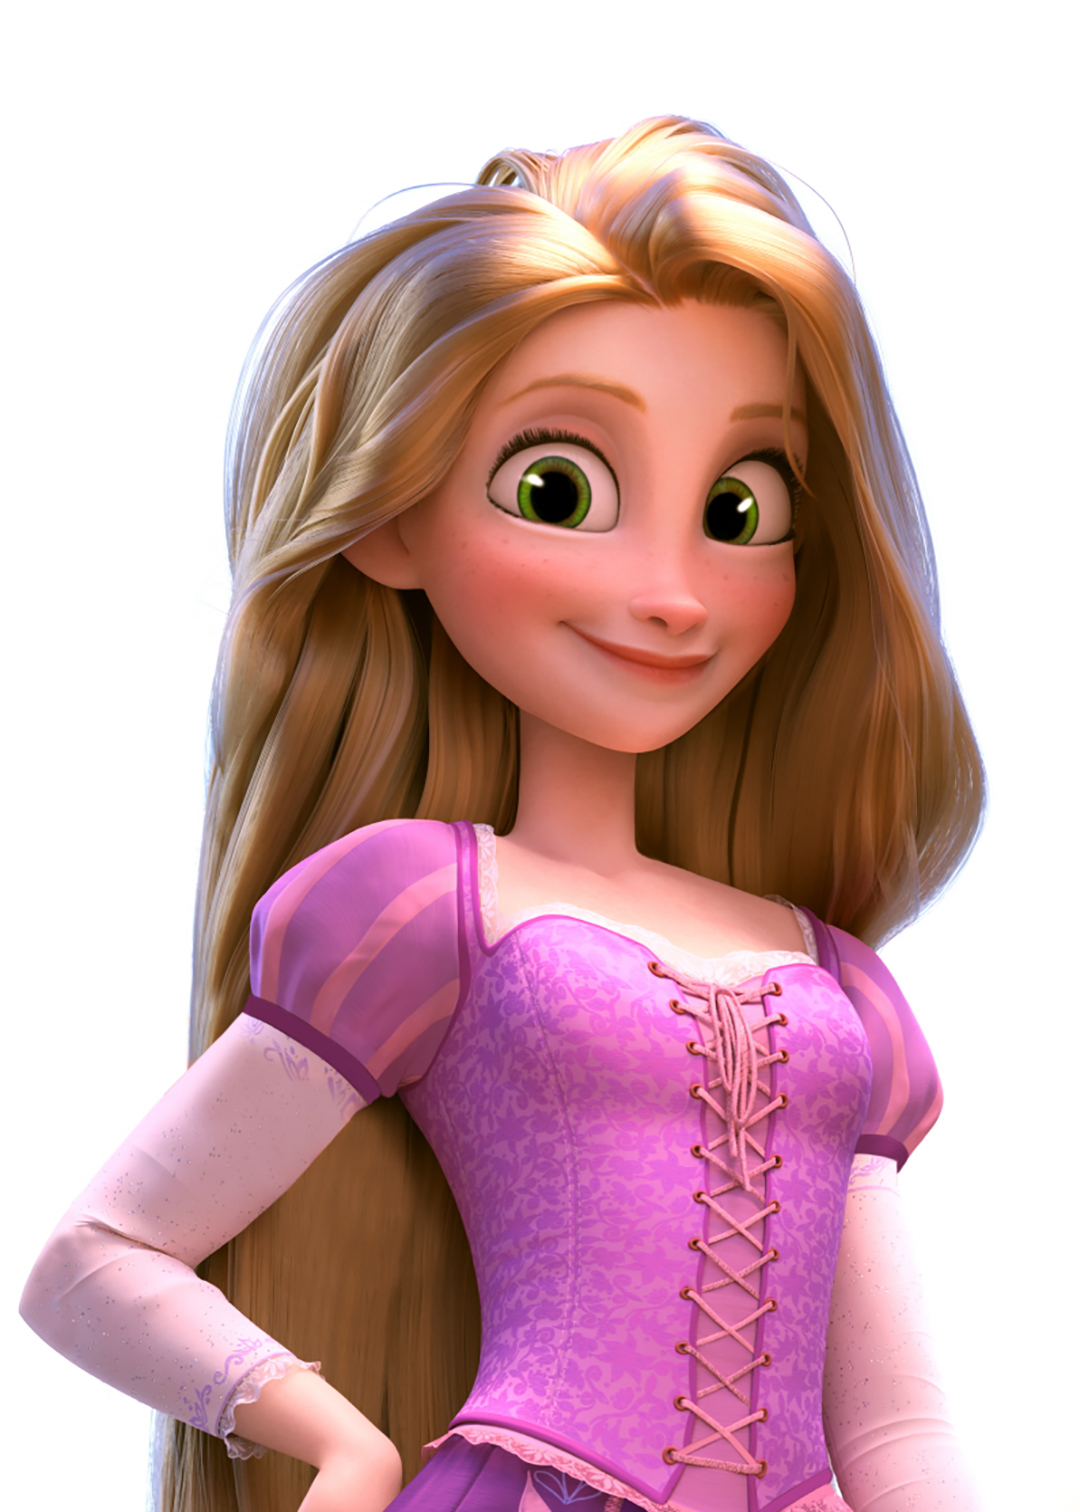 https://static.wikia.nocookie.net/fabulous-angelas/images/8/81/Queen_Rapunzel_Fitzherbert_of_Corona_RBTI_HD.jpg/revision/latest?cb=20201108043438